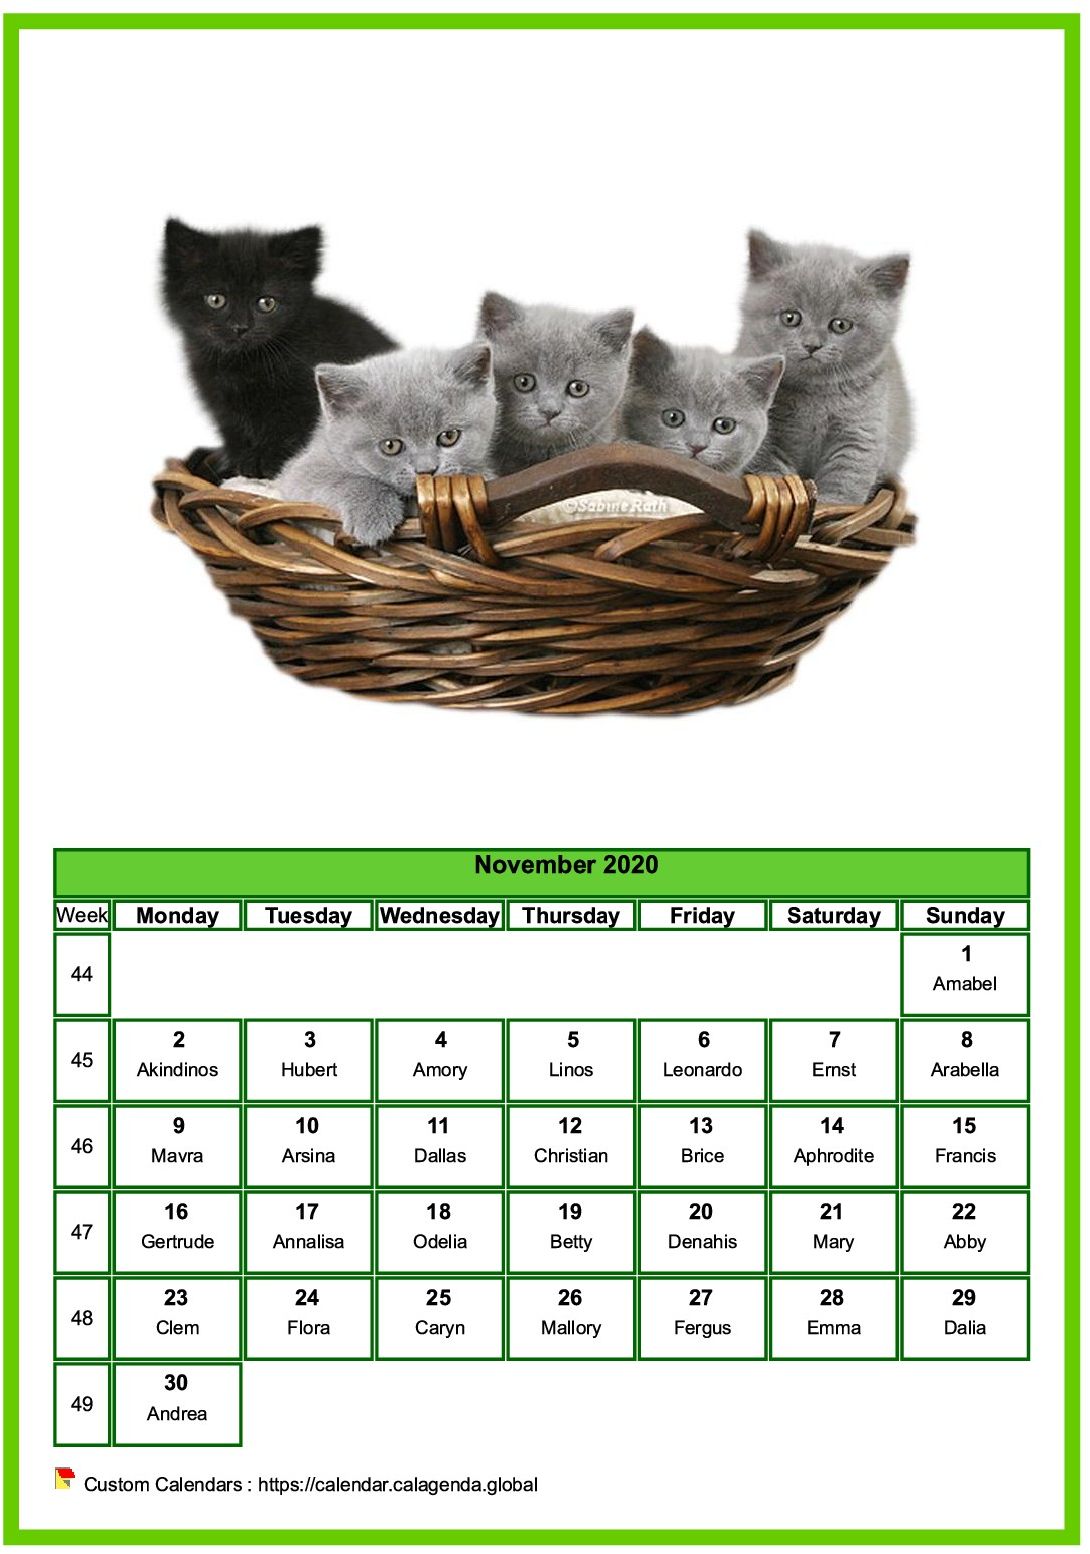 Calendar November 2020 cats